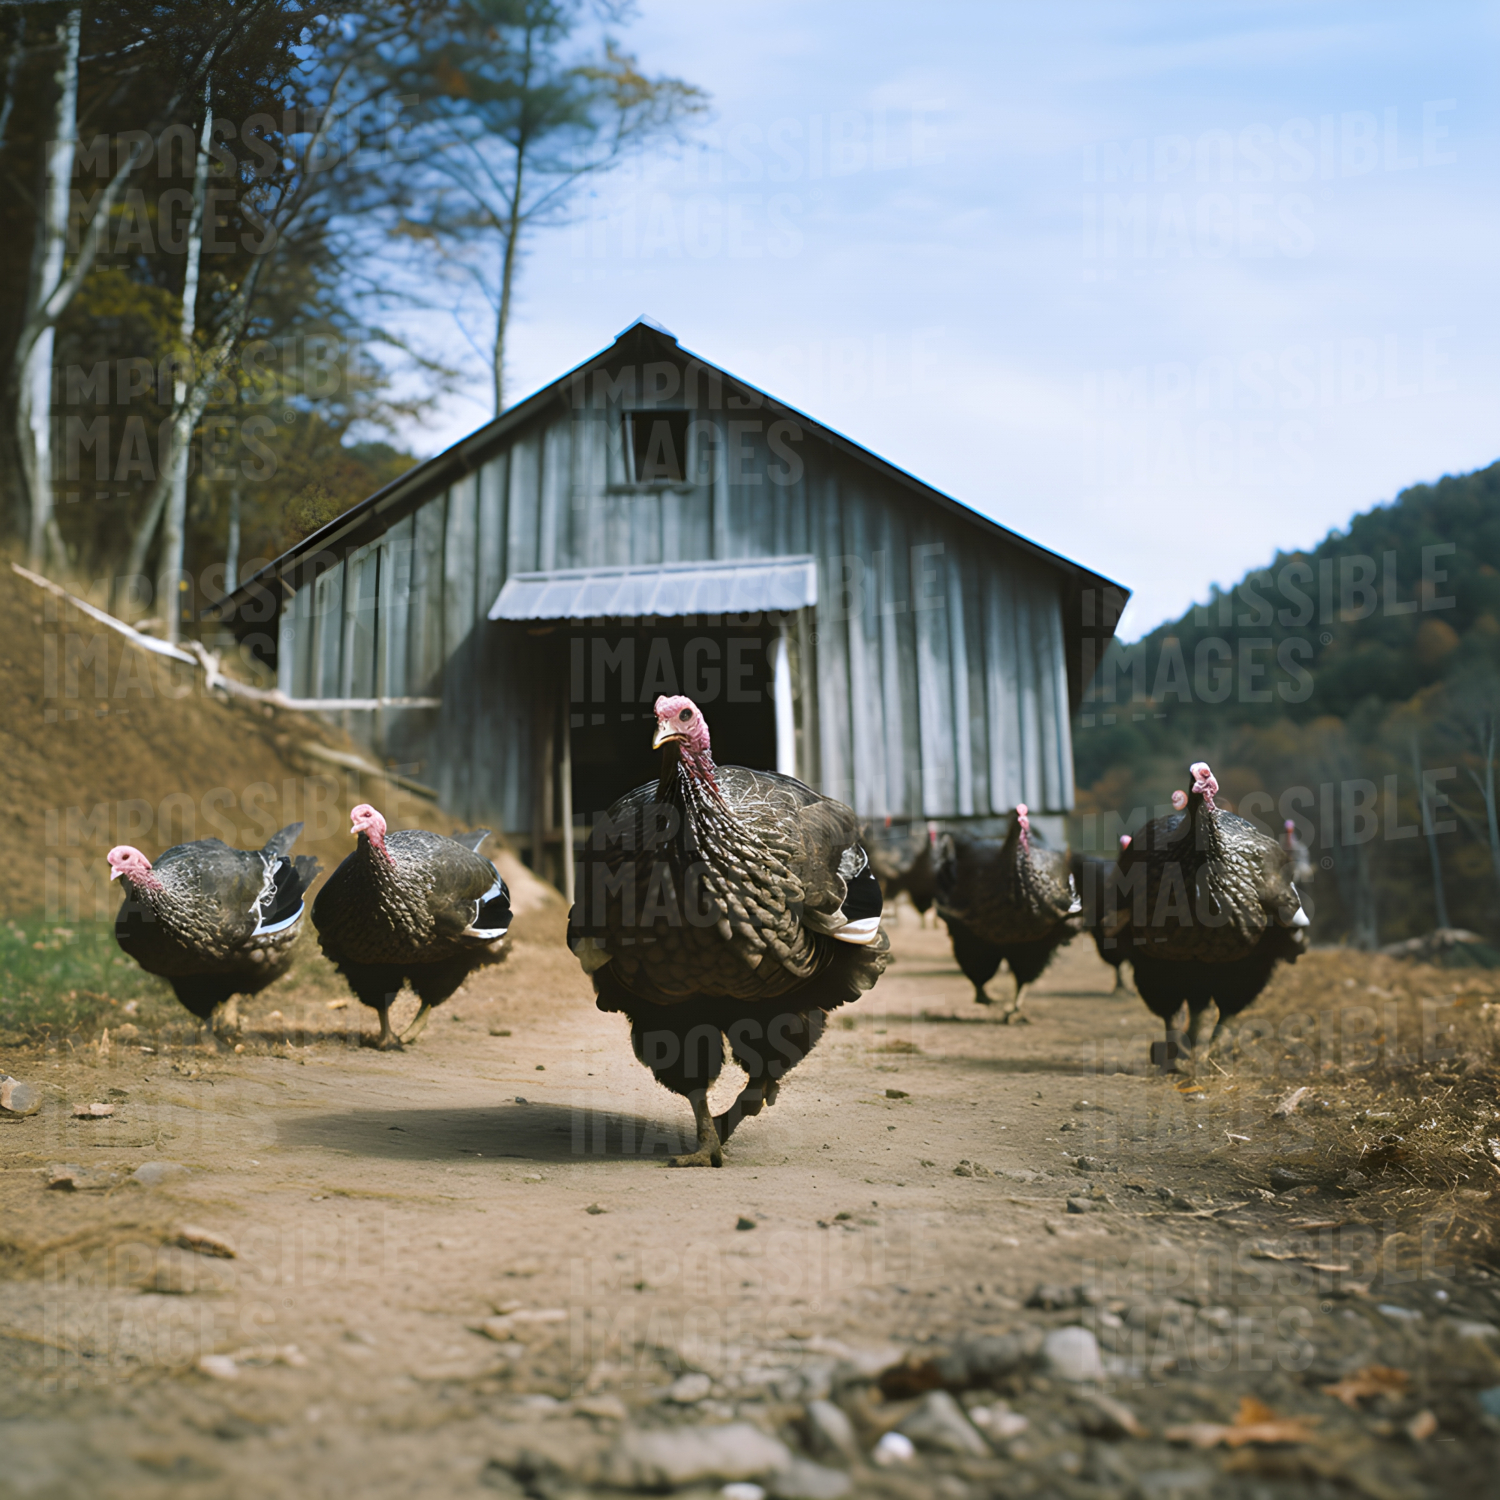 Turkeys escaping the farm before Christmas